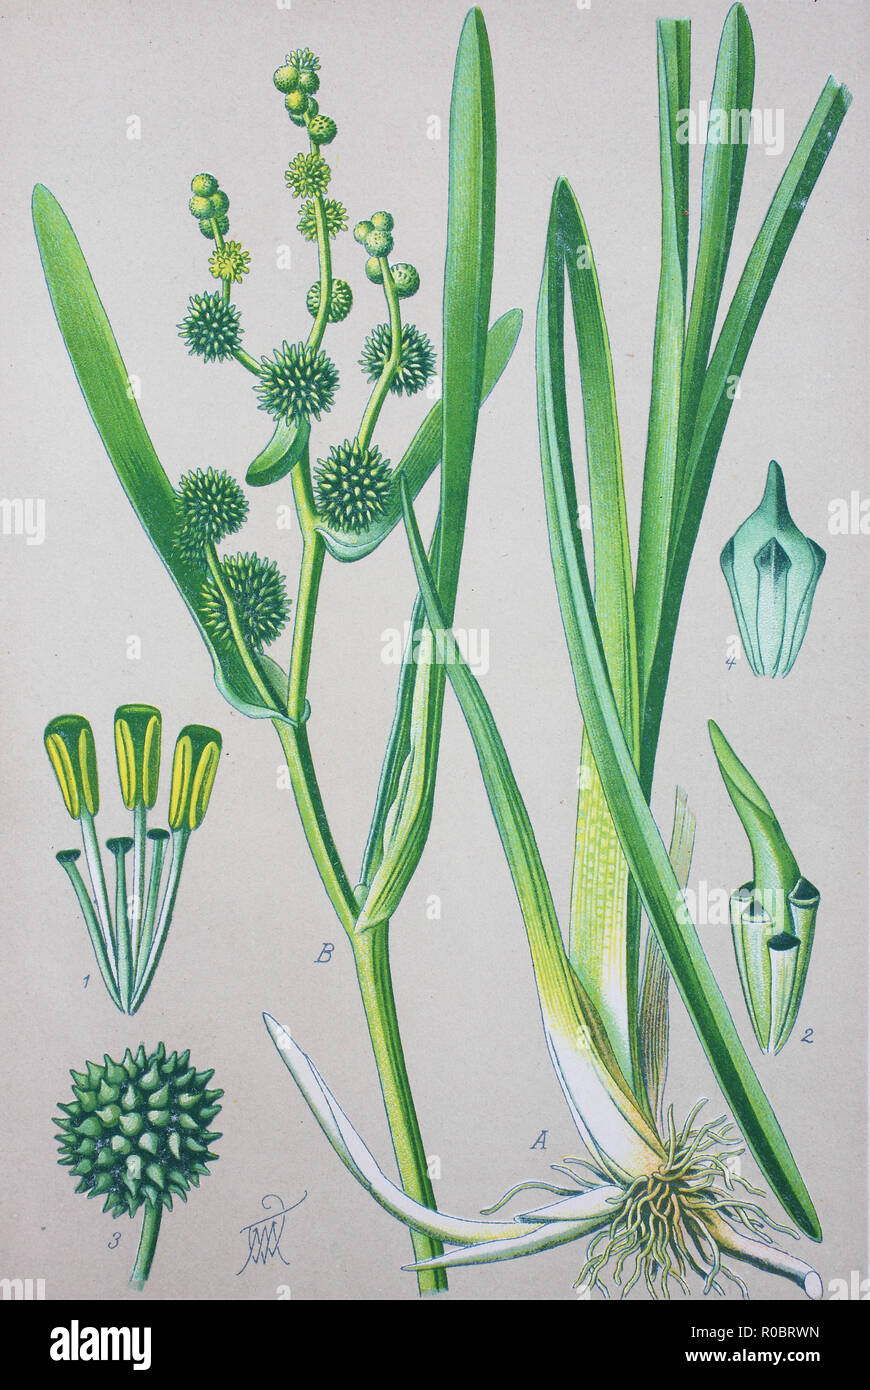 Miglioramento digitale ad alta qualità di riproduzione: Sparganium erectum, il simplestem bur-reed o ramificato bur-reed, è una pianta perenne specie in genere Sparganium Foto Stock